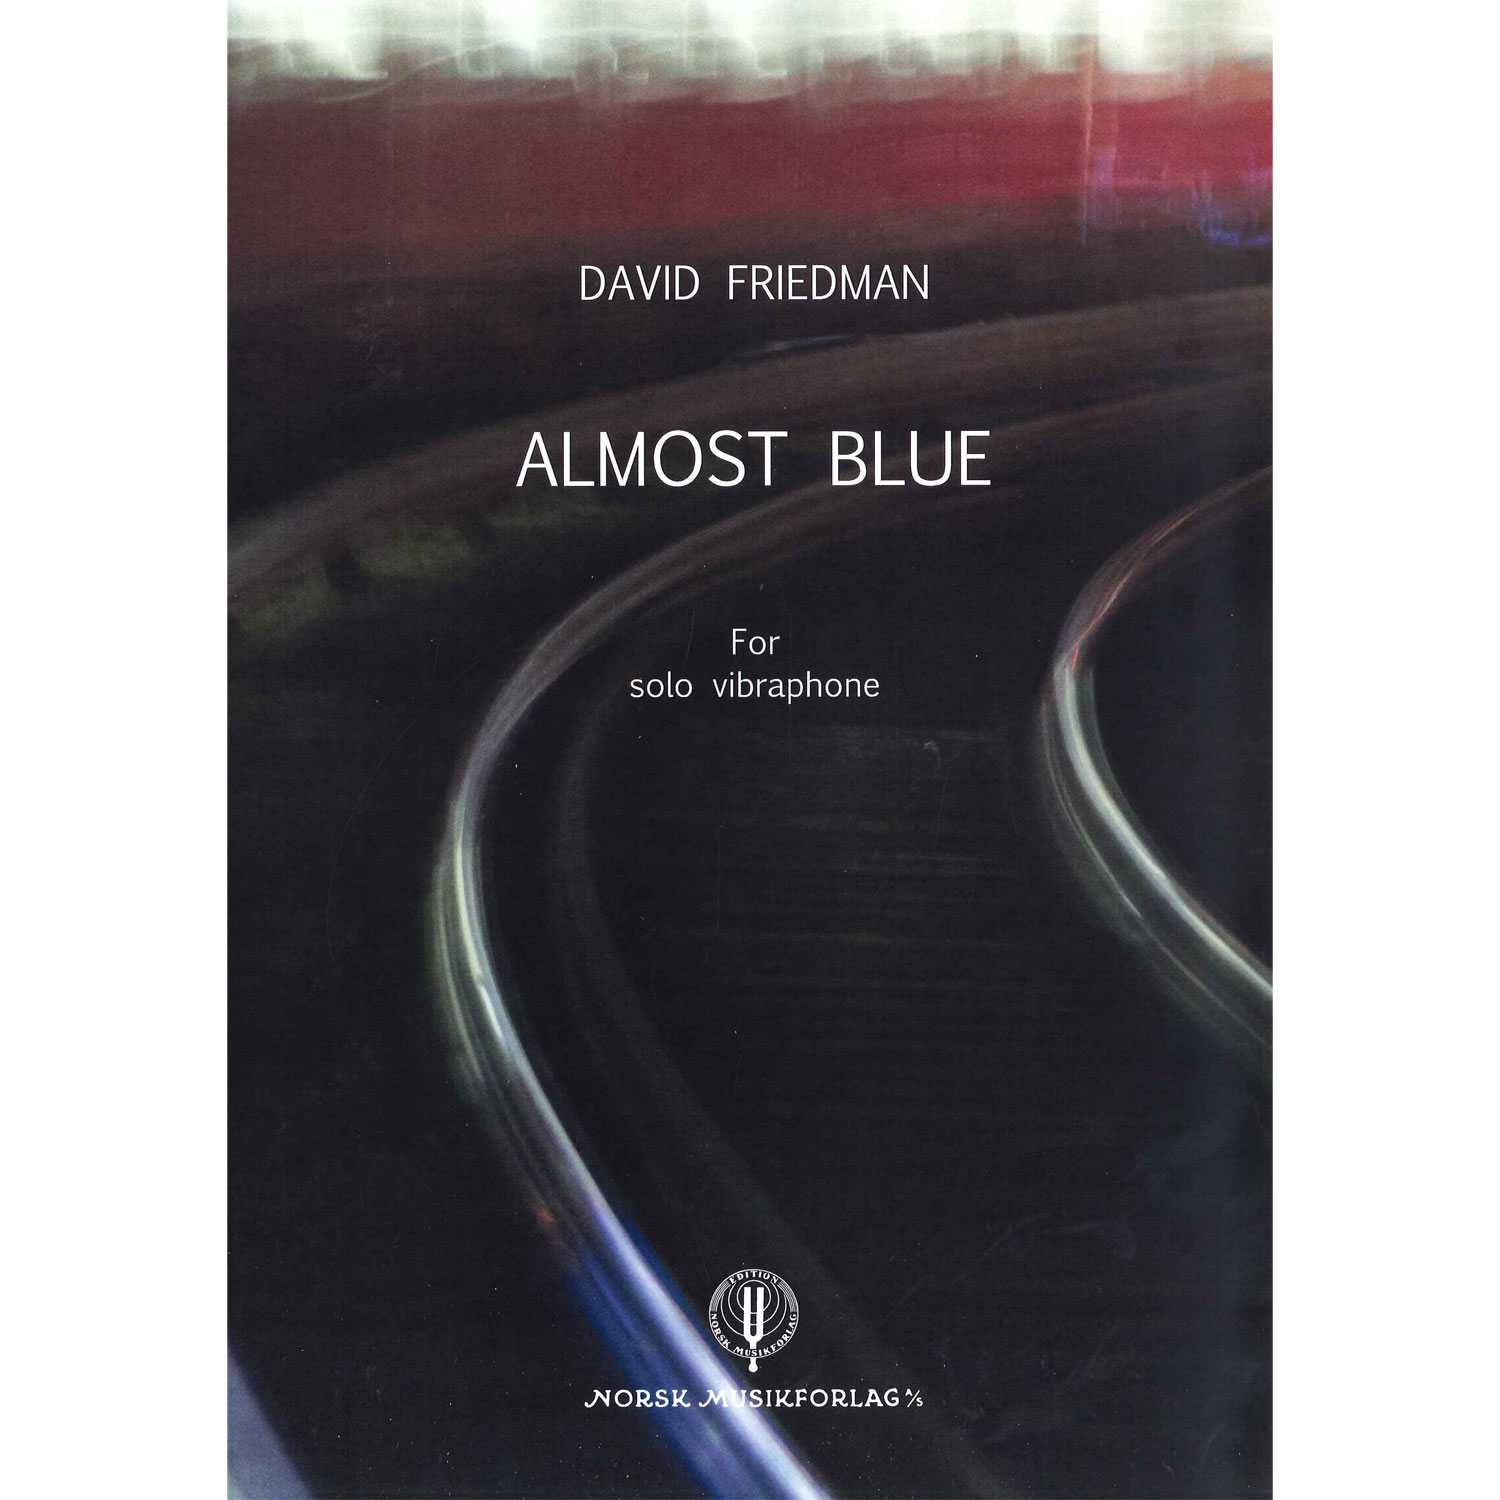 Almost Blue by David Friedman